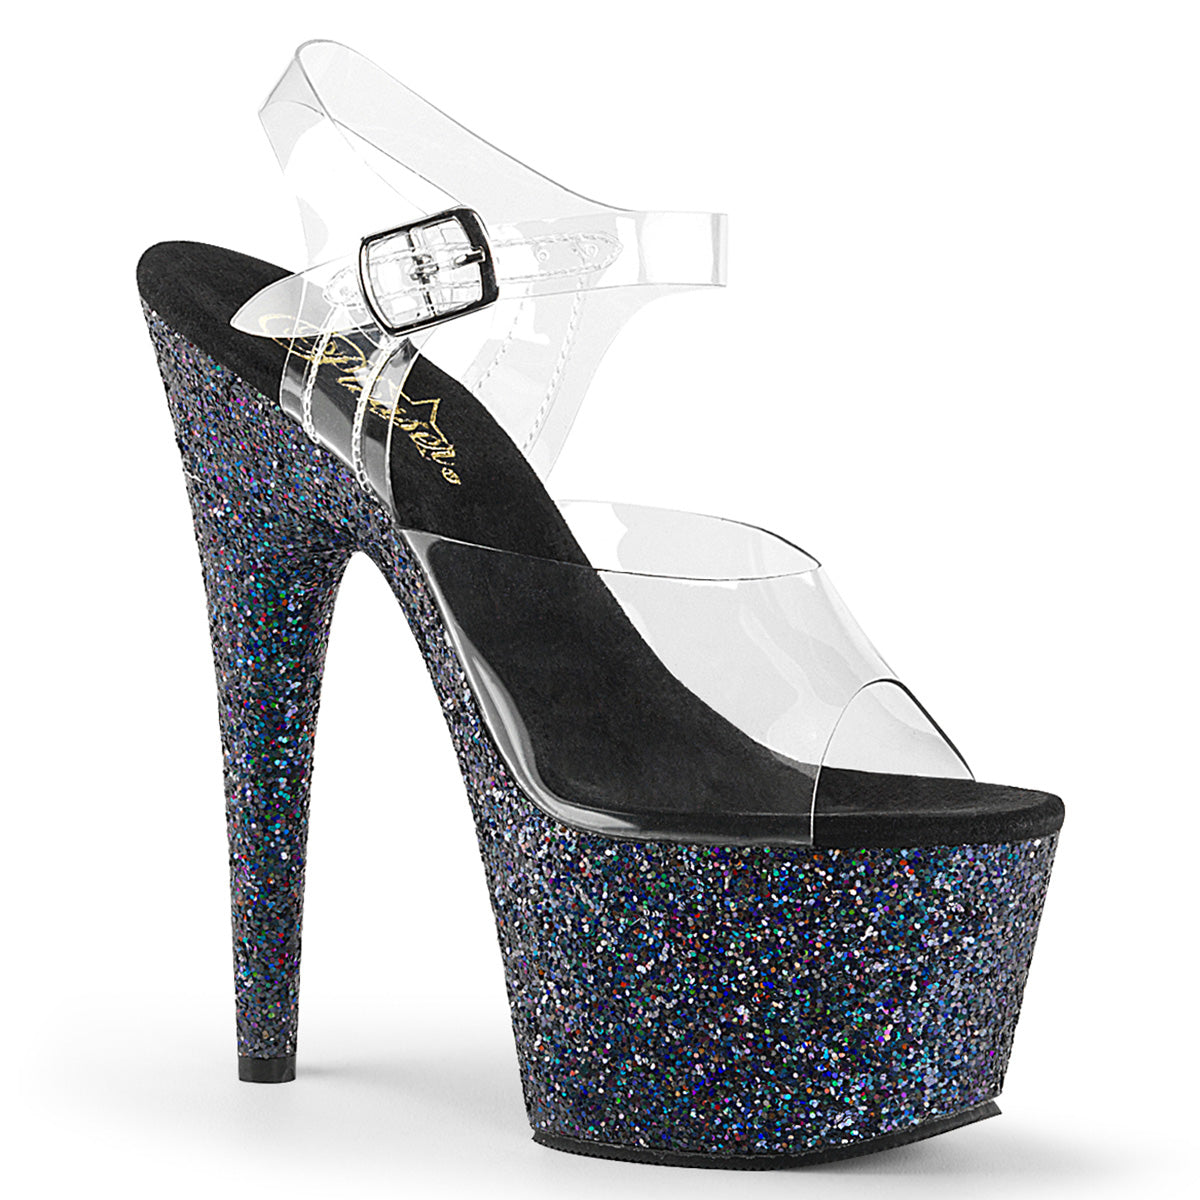 Adore-708LG 7 "Heel Clear Black Glitter Sexy Sandals